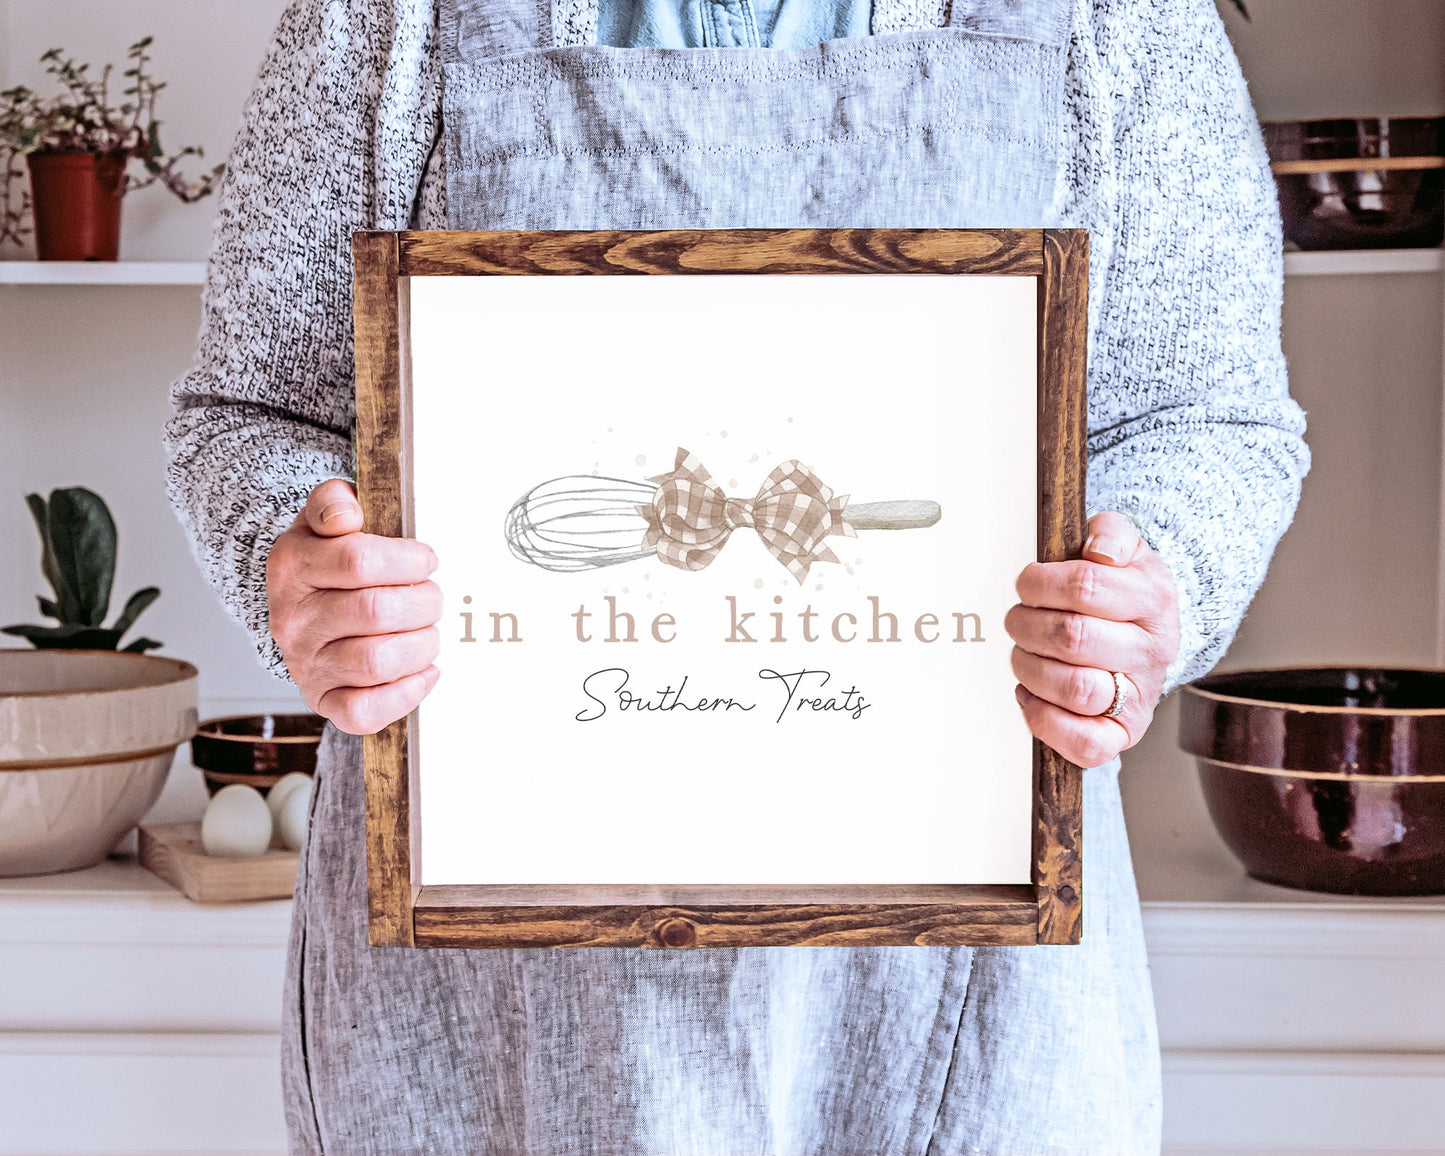 In The Kitchen | Premade Logo Design | Whisk, Plaid Bow, Kitchen, Southern, Farmhouse